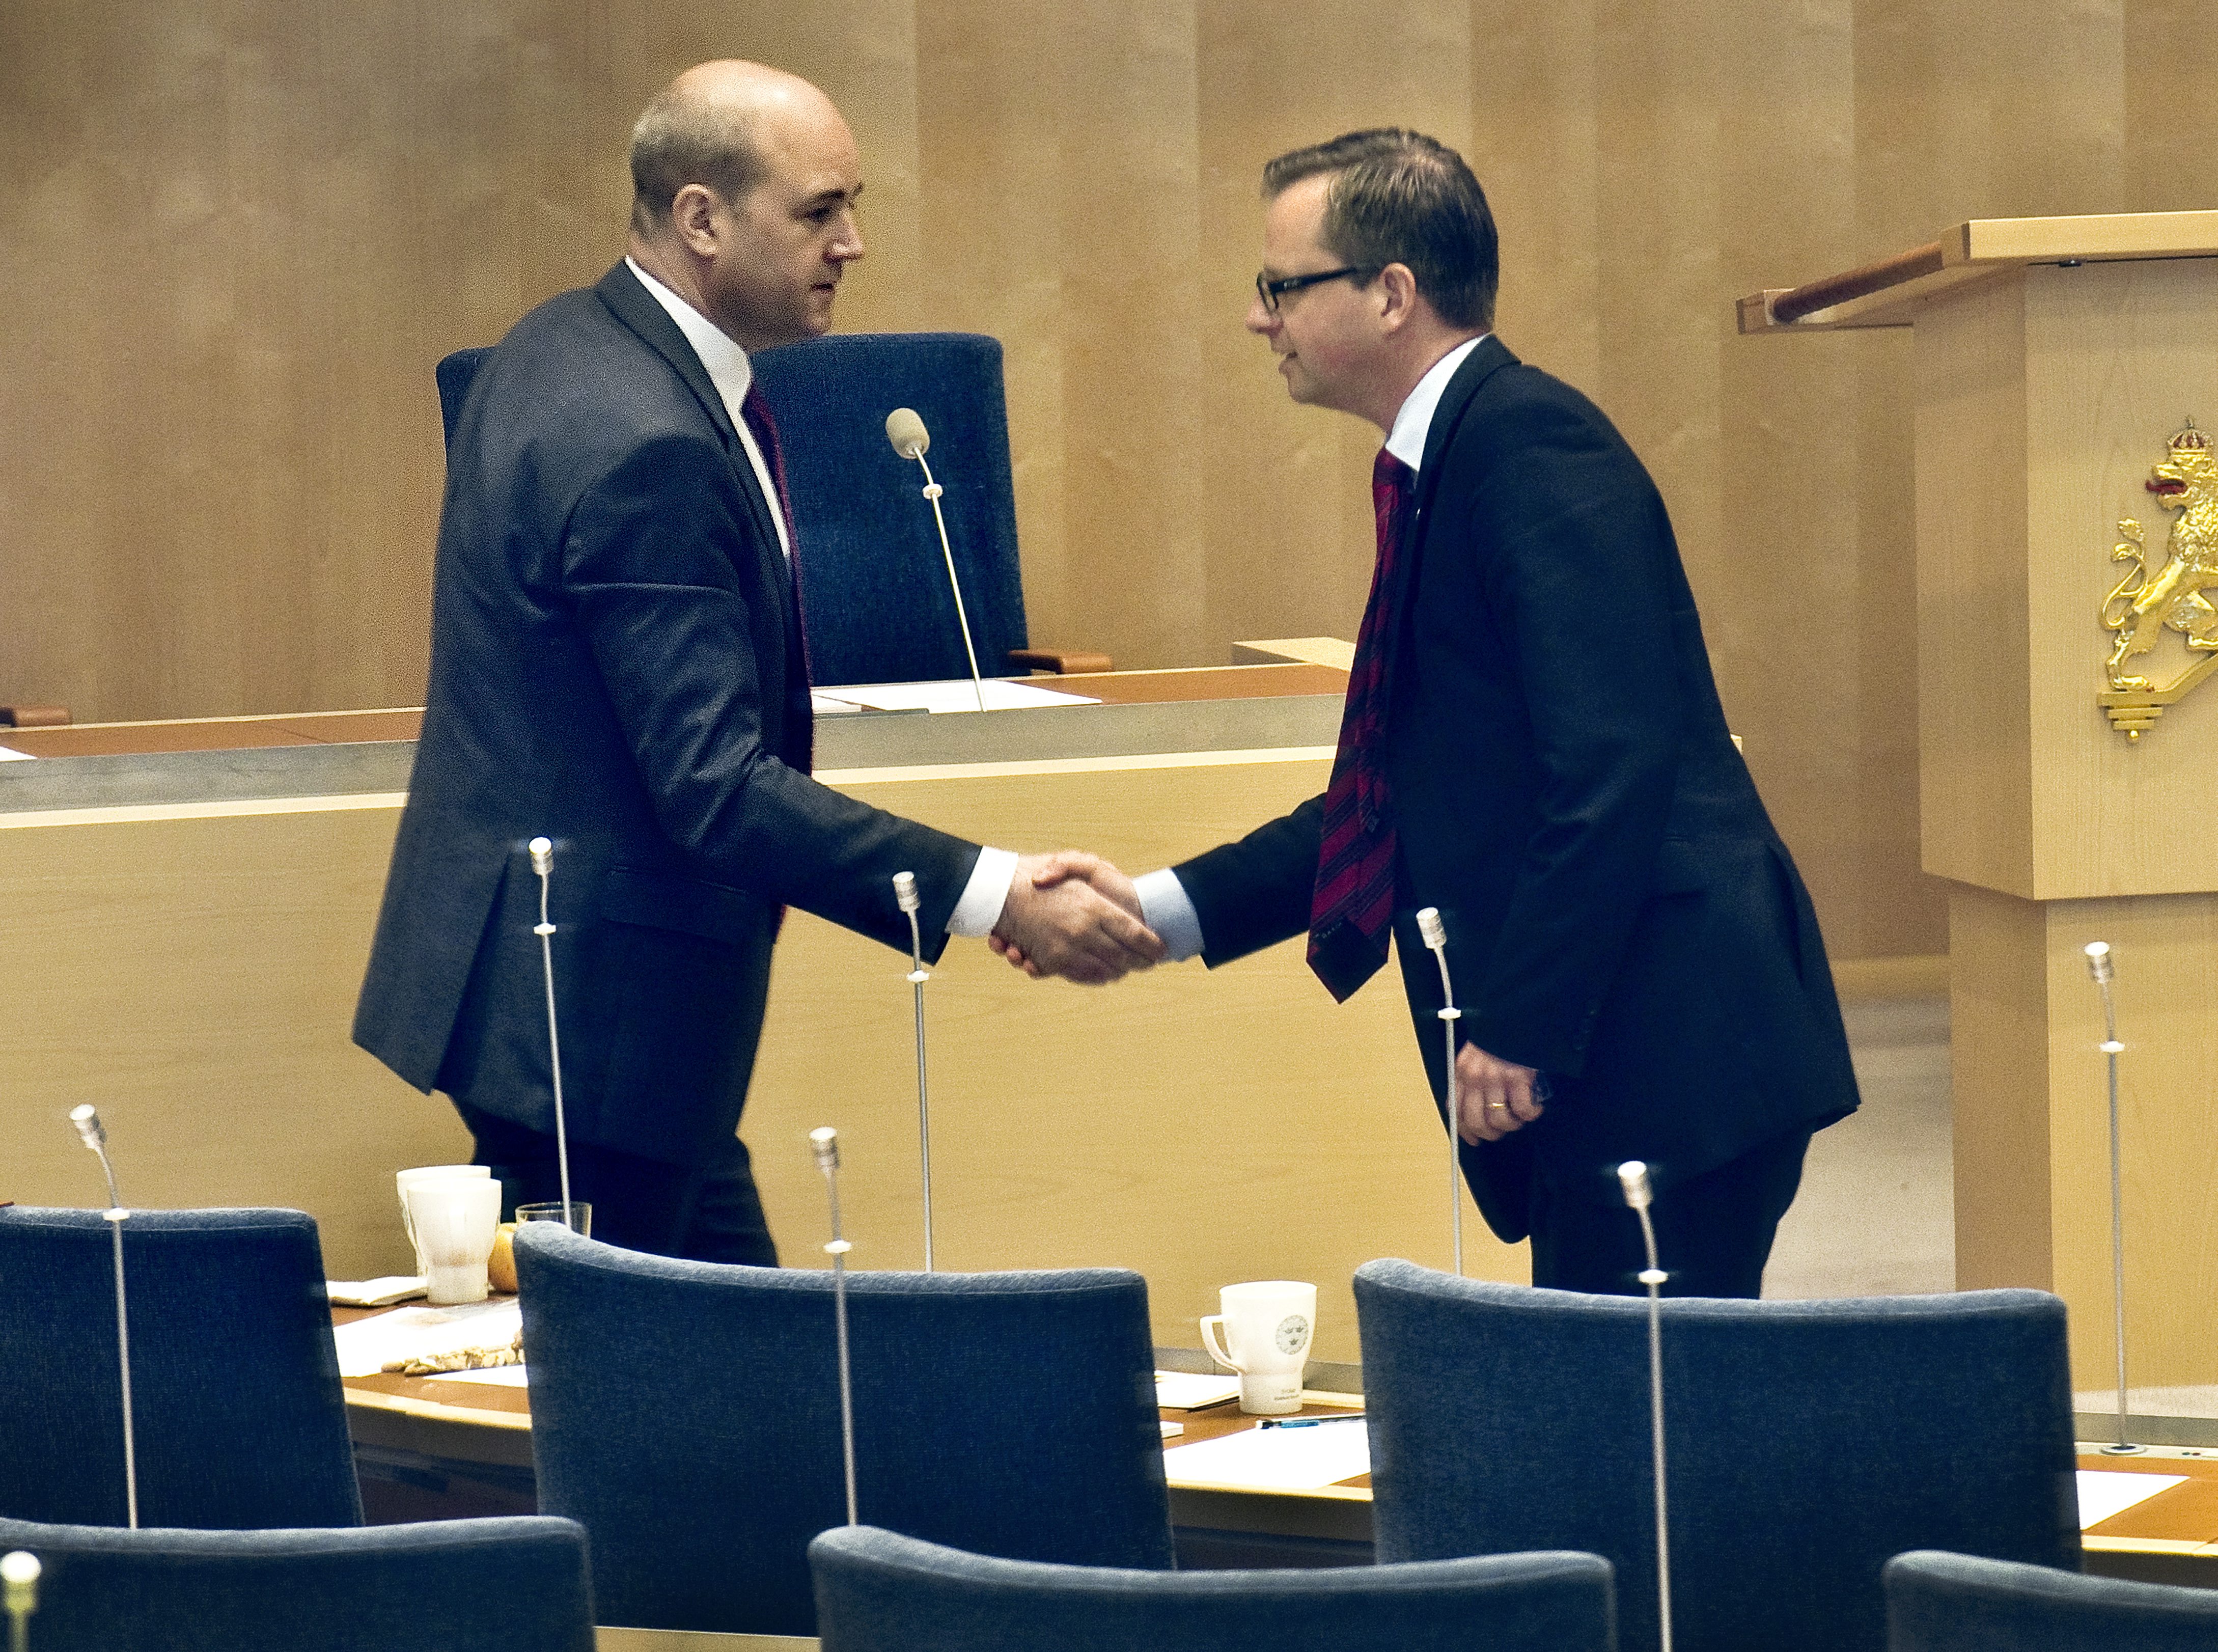 Politik, Sverigedemokraterna, Partiledare, Debatt, Socialdemokraterna, Alliansen, Fredrik Reinfeldt